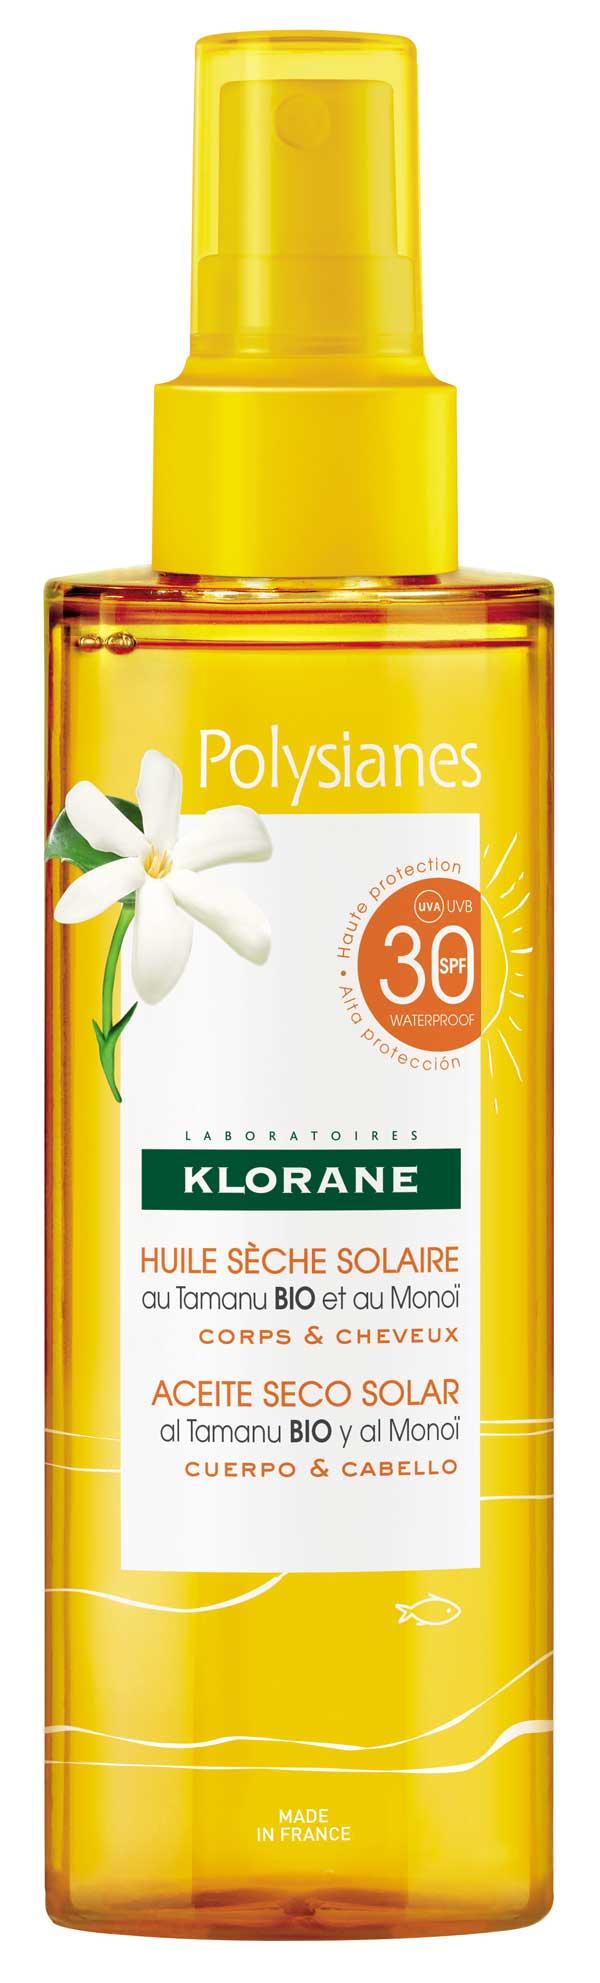 Klorane Polysianes Aceite Seco Solar Spf 30 200Ml